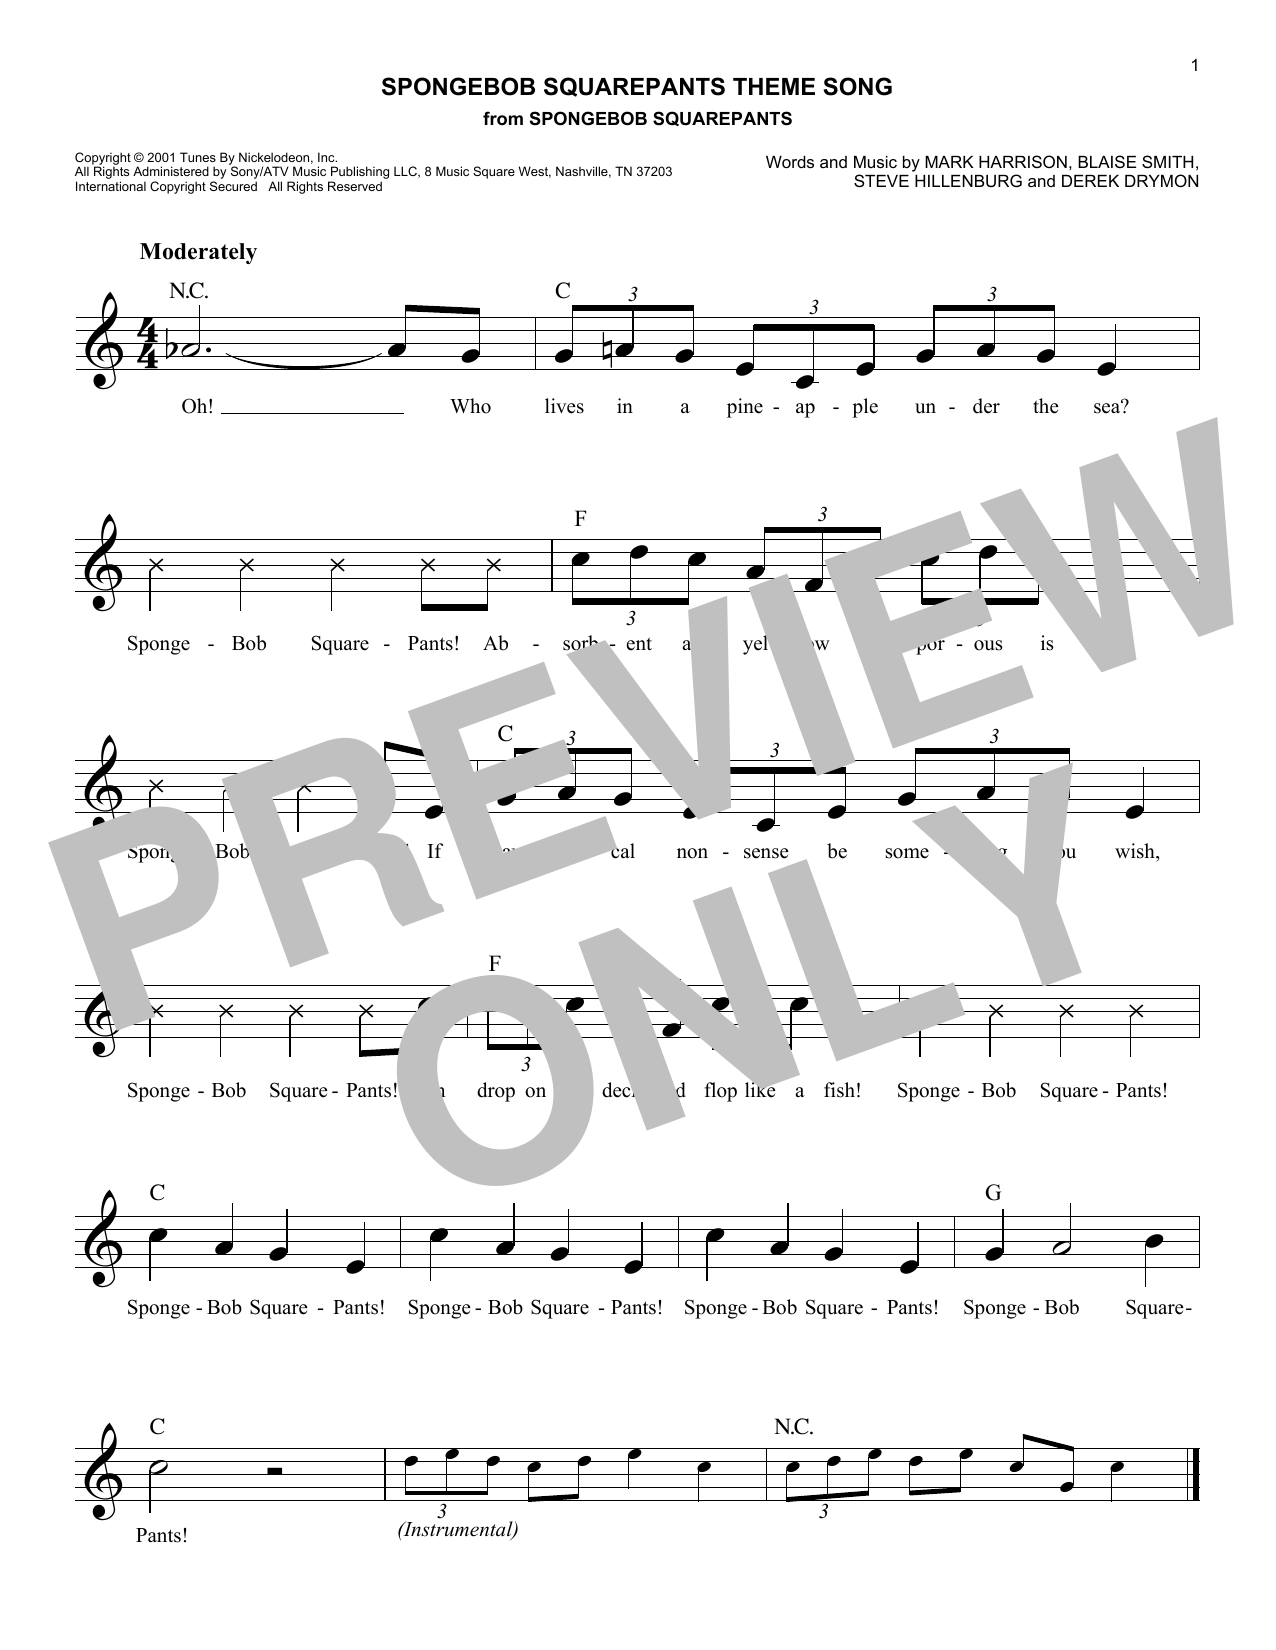 Steve Hillenburg SpongeBob SquarePants Theme Song Sheet Music Notes & Chords for Lead Sheet / Fake Book - Download or Print PDF